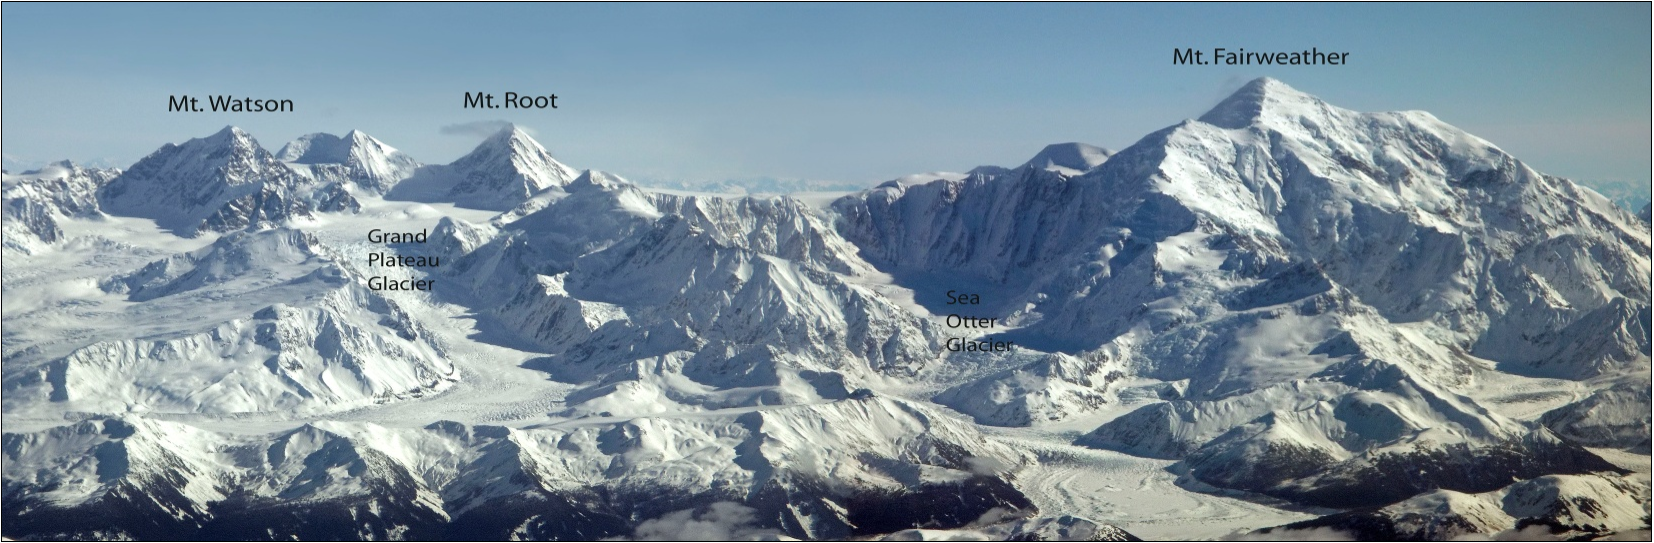 Snow-capped peaks of Fairweather Range with glaciers in between